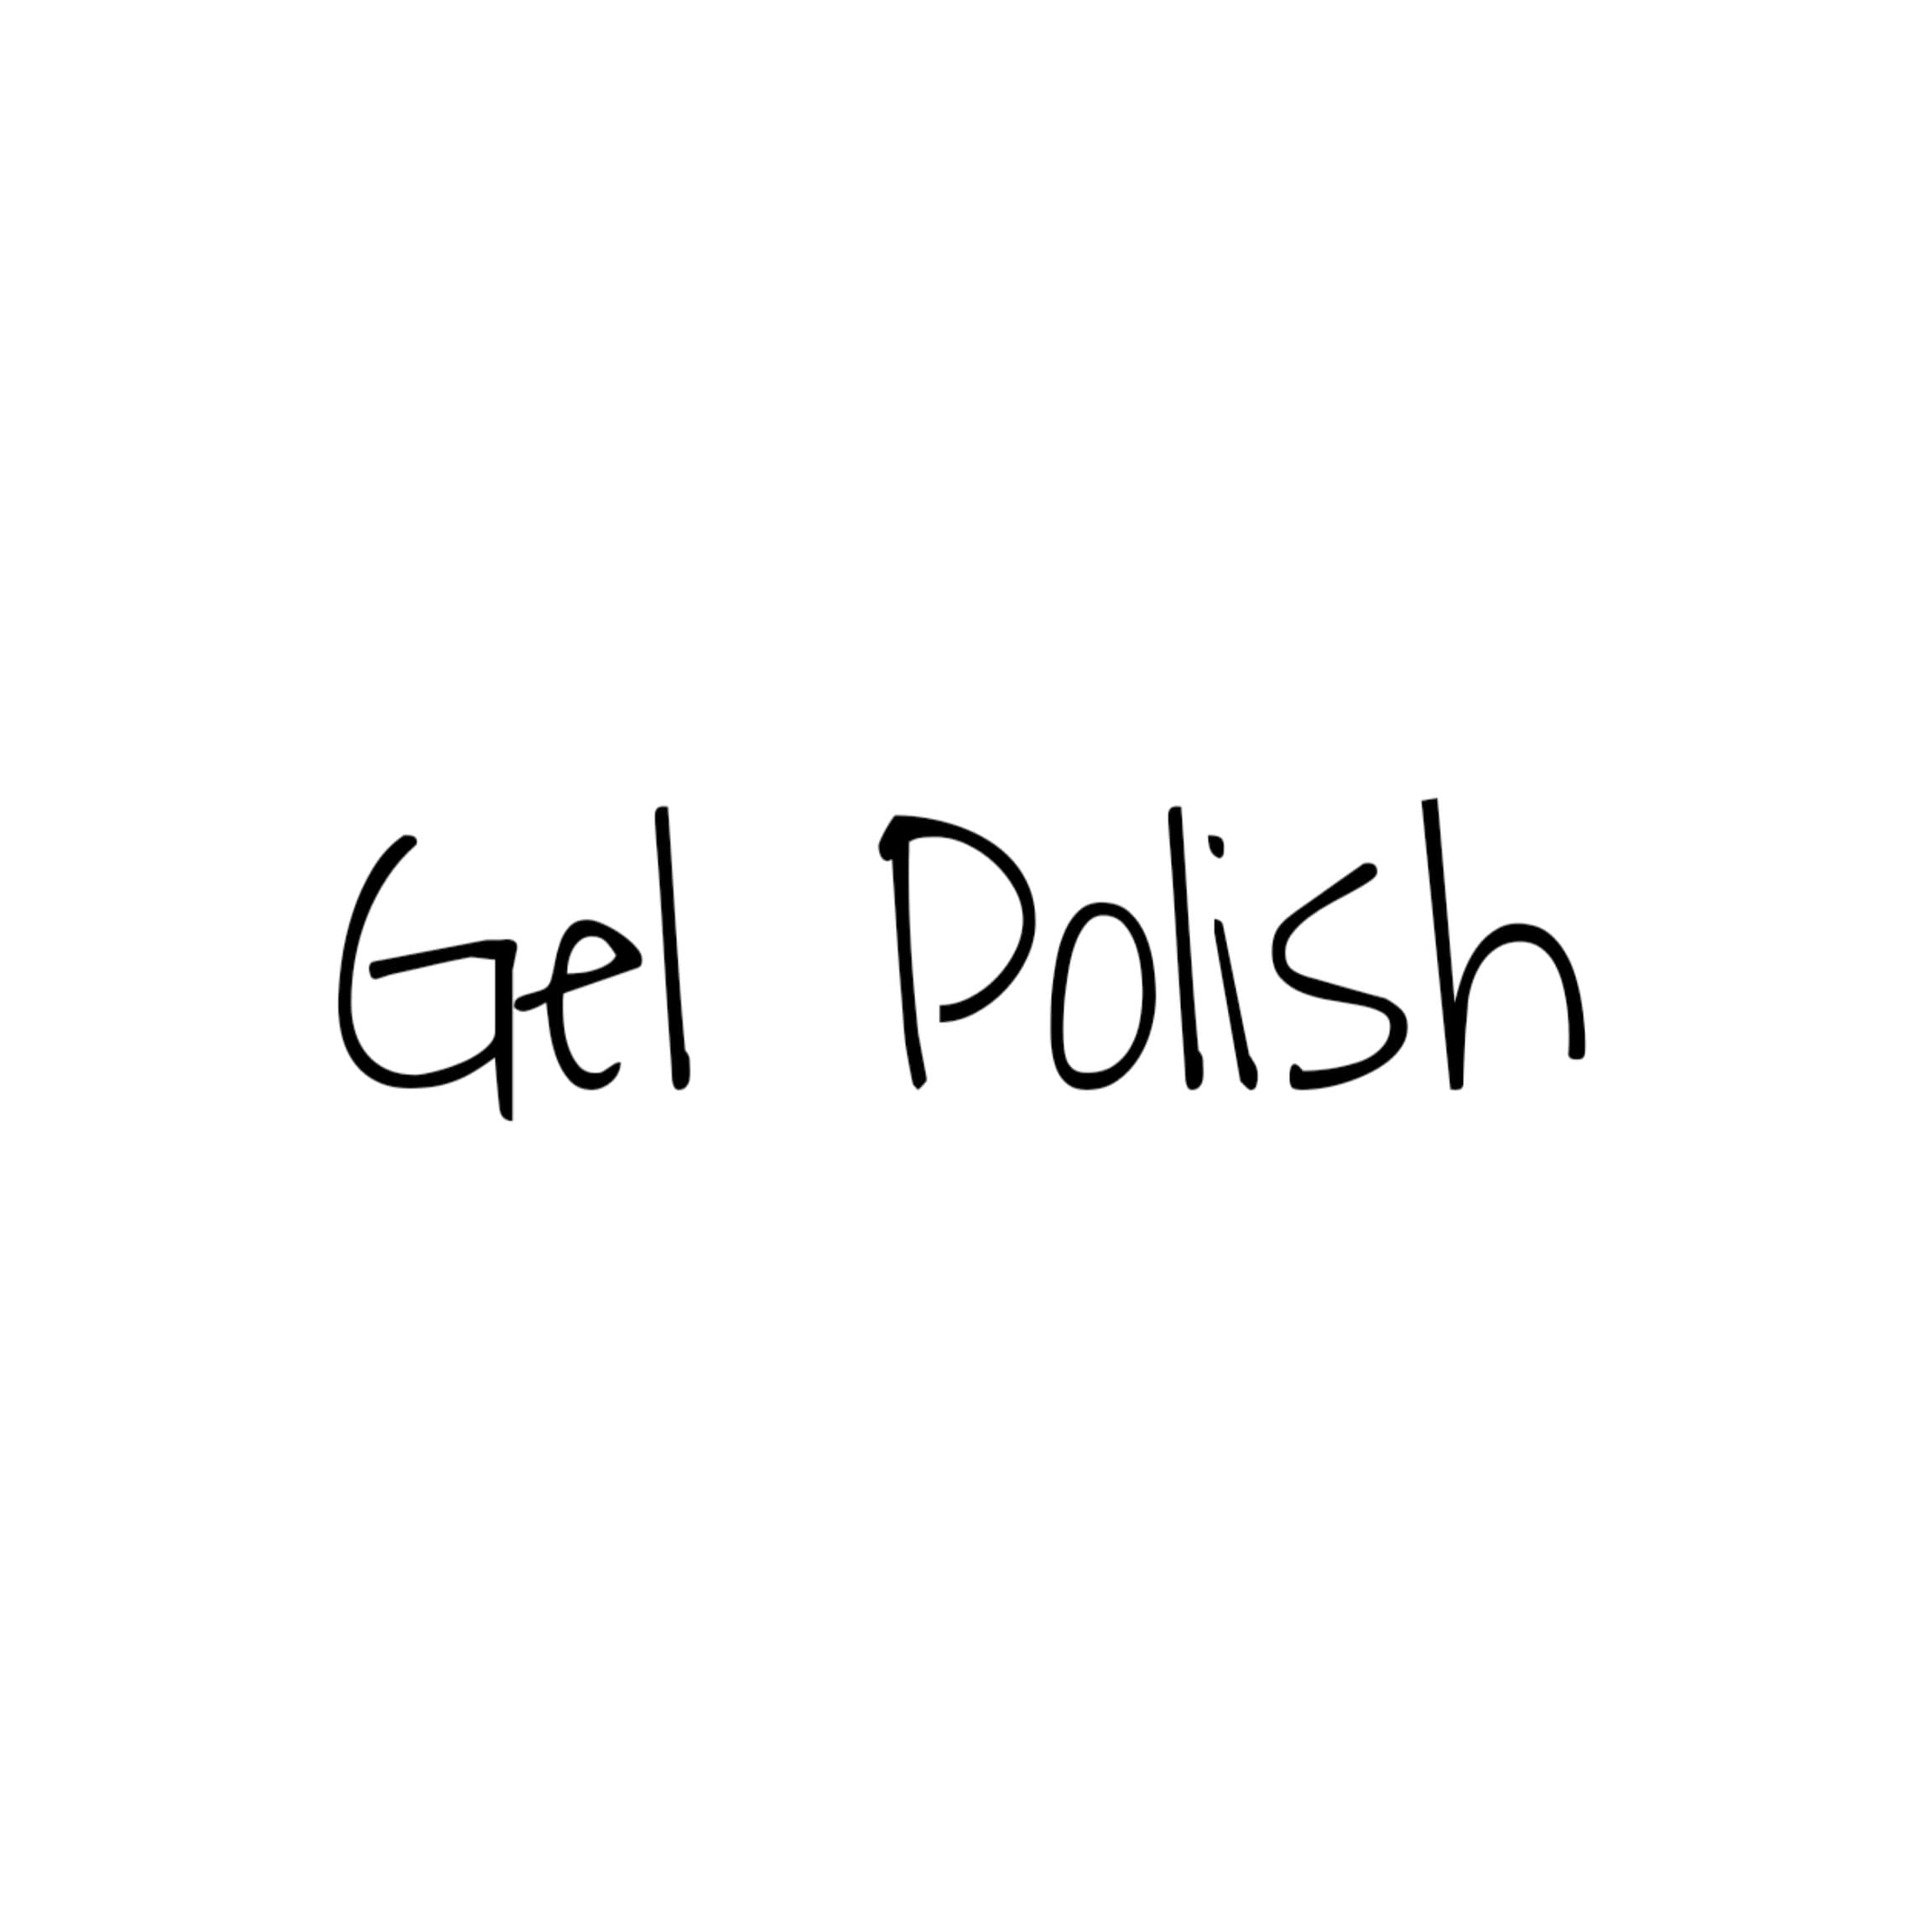 Gel Polish Course Manchester